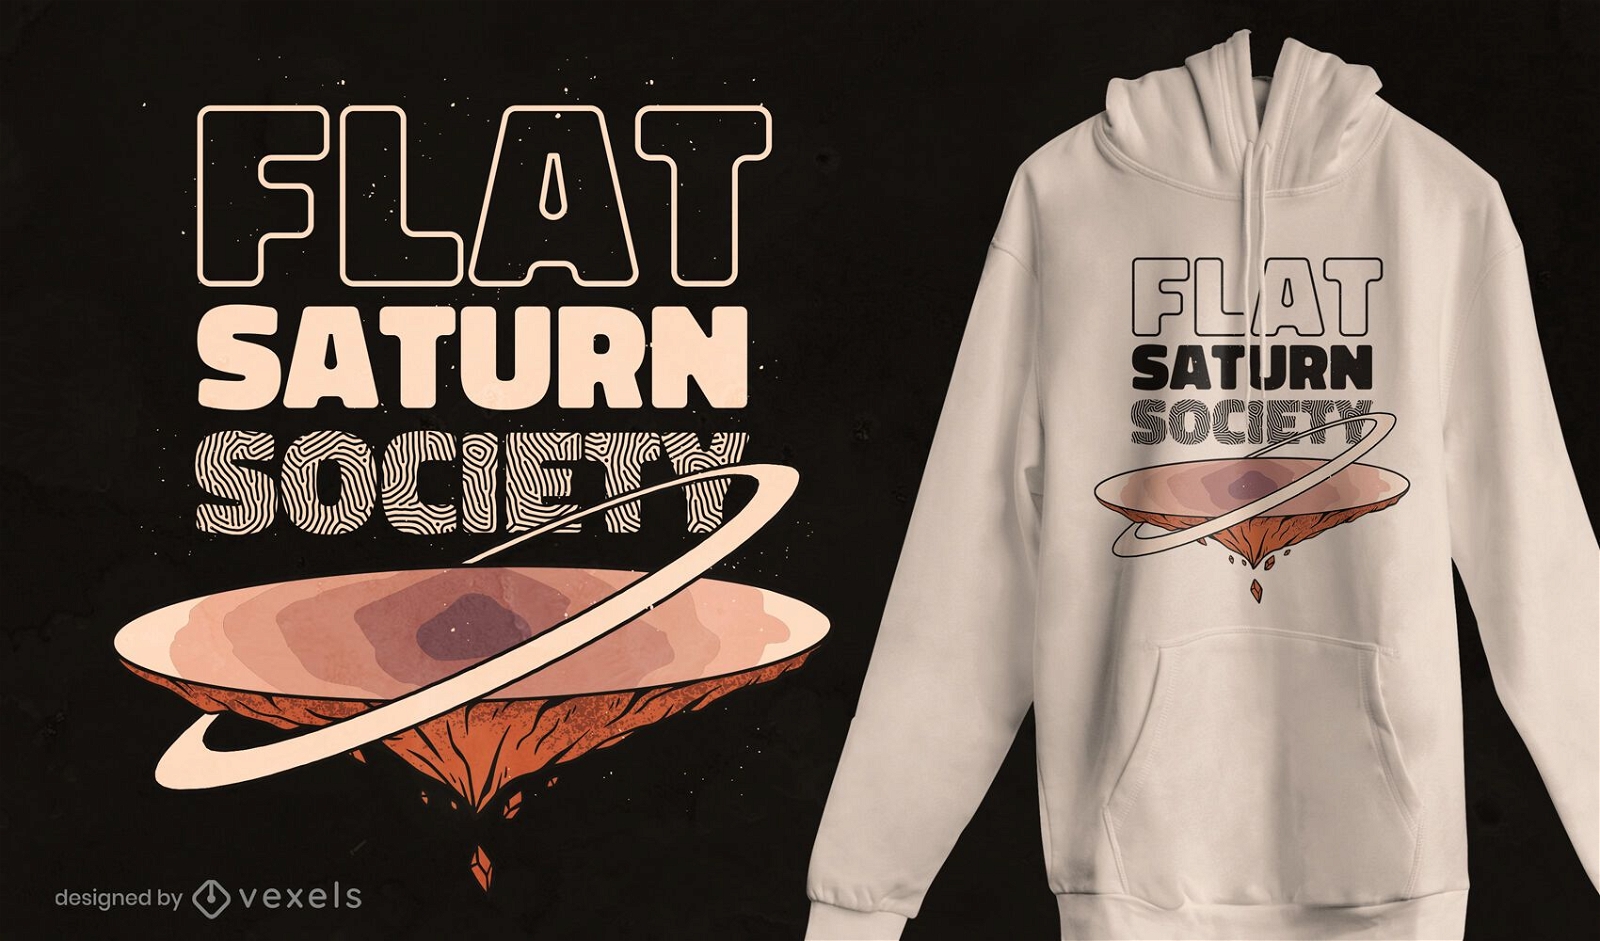 Flaches Saturn-Gesellschaftst-shirt Design